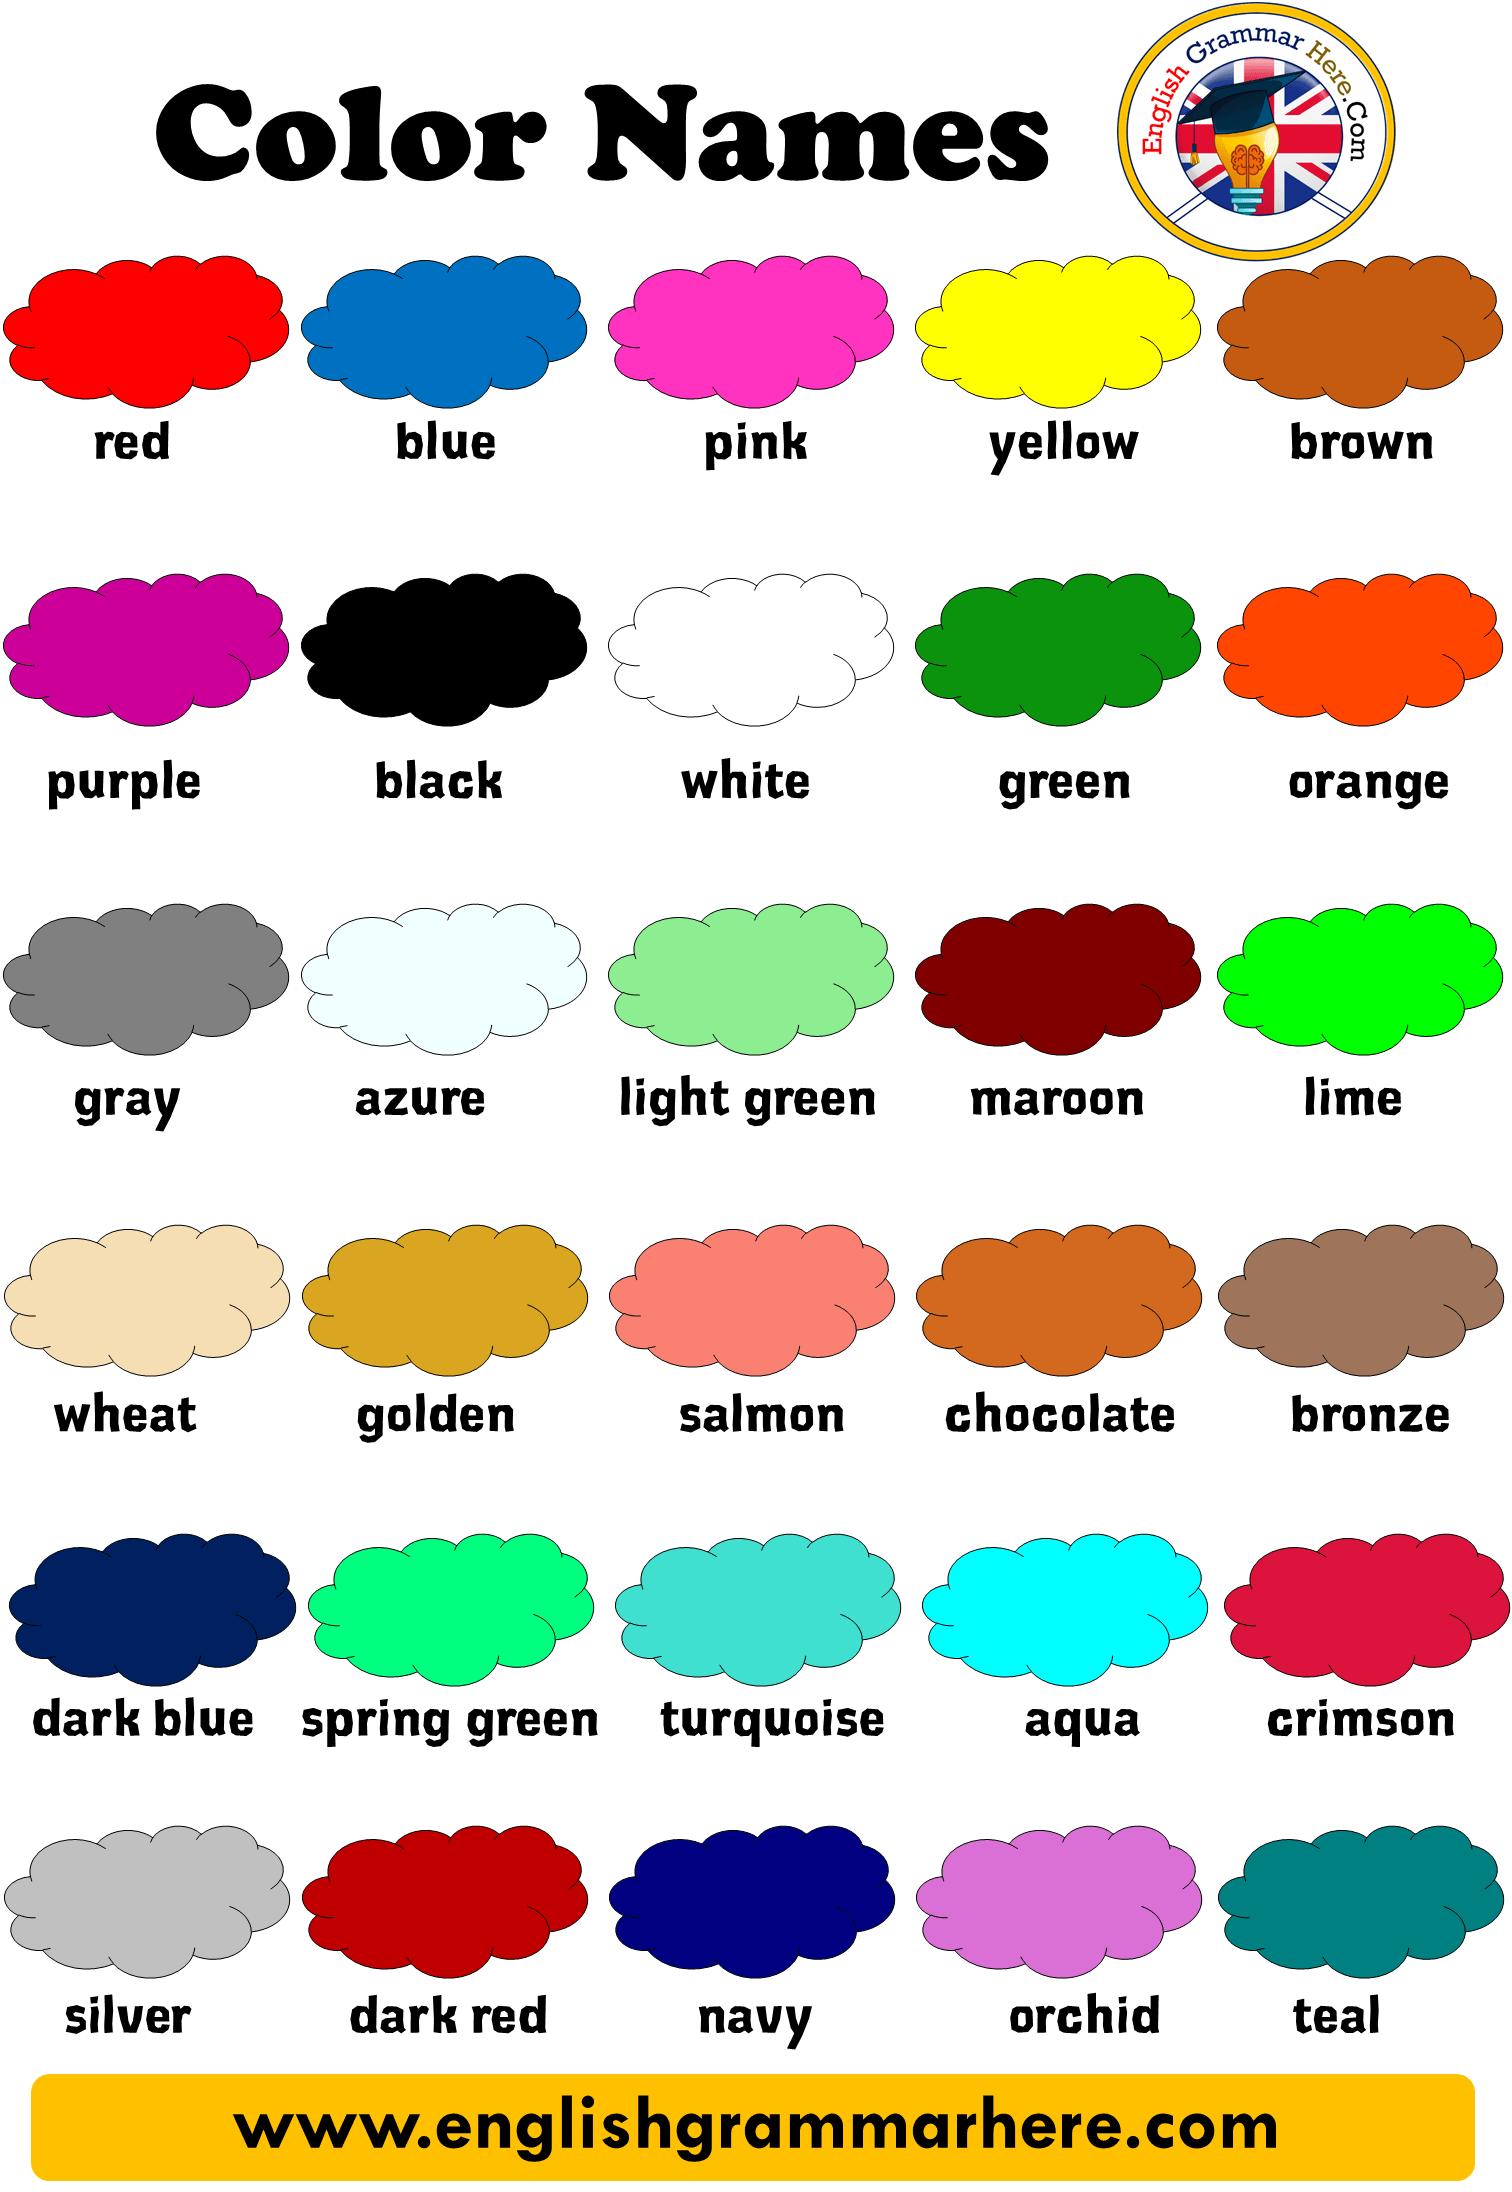 Color Name List, List Of Colors